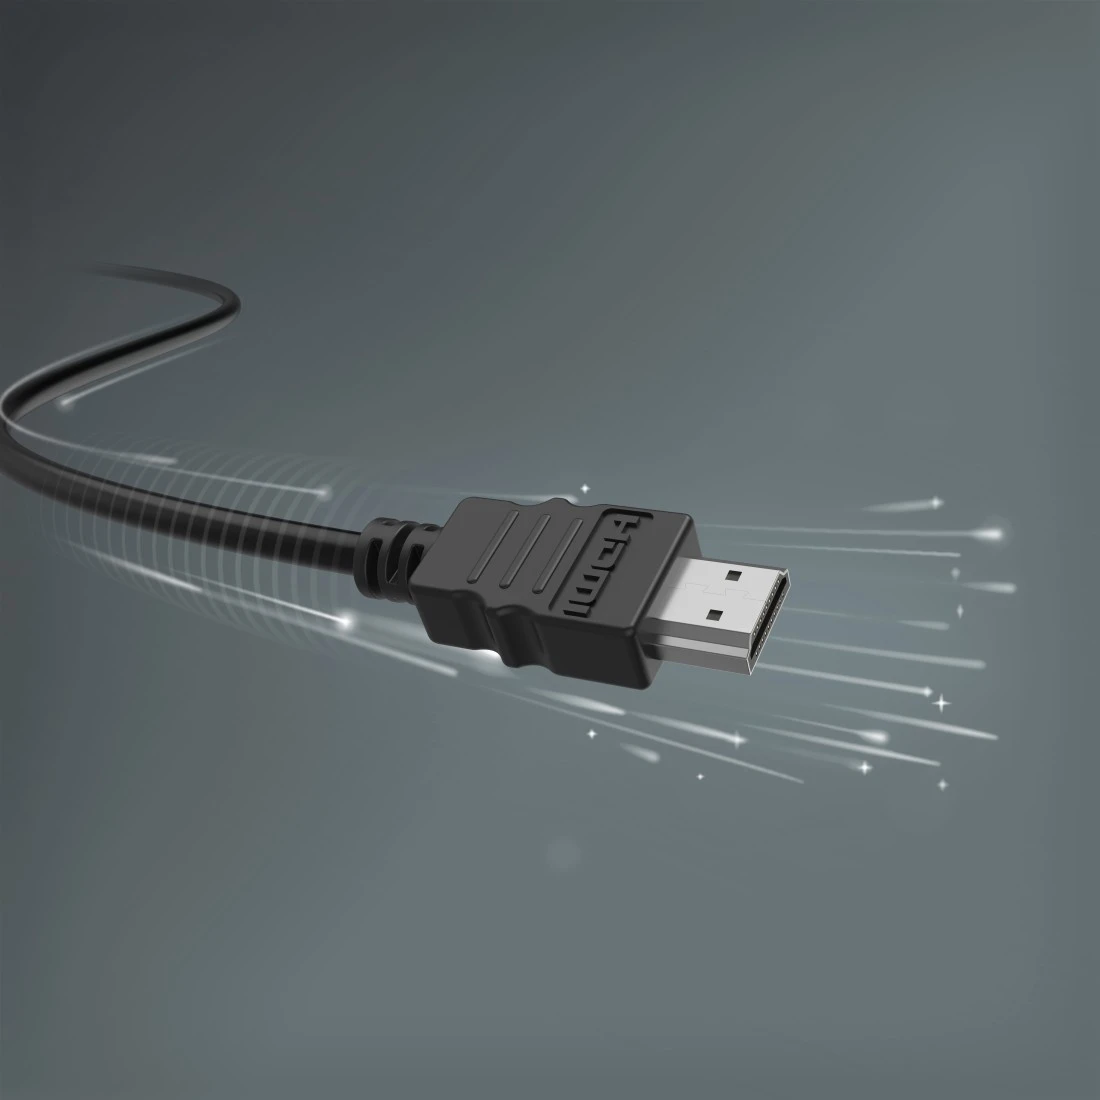 Câble HDMI Melchioni 10m HDMI haute vitesse